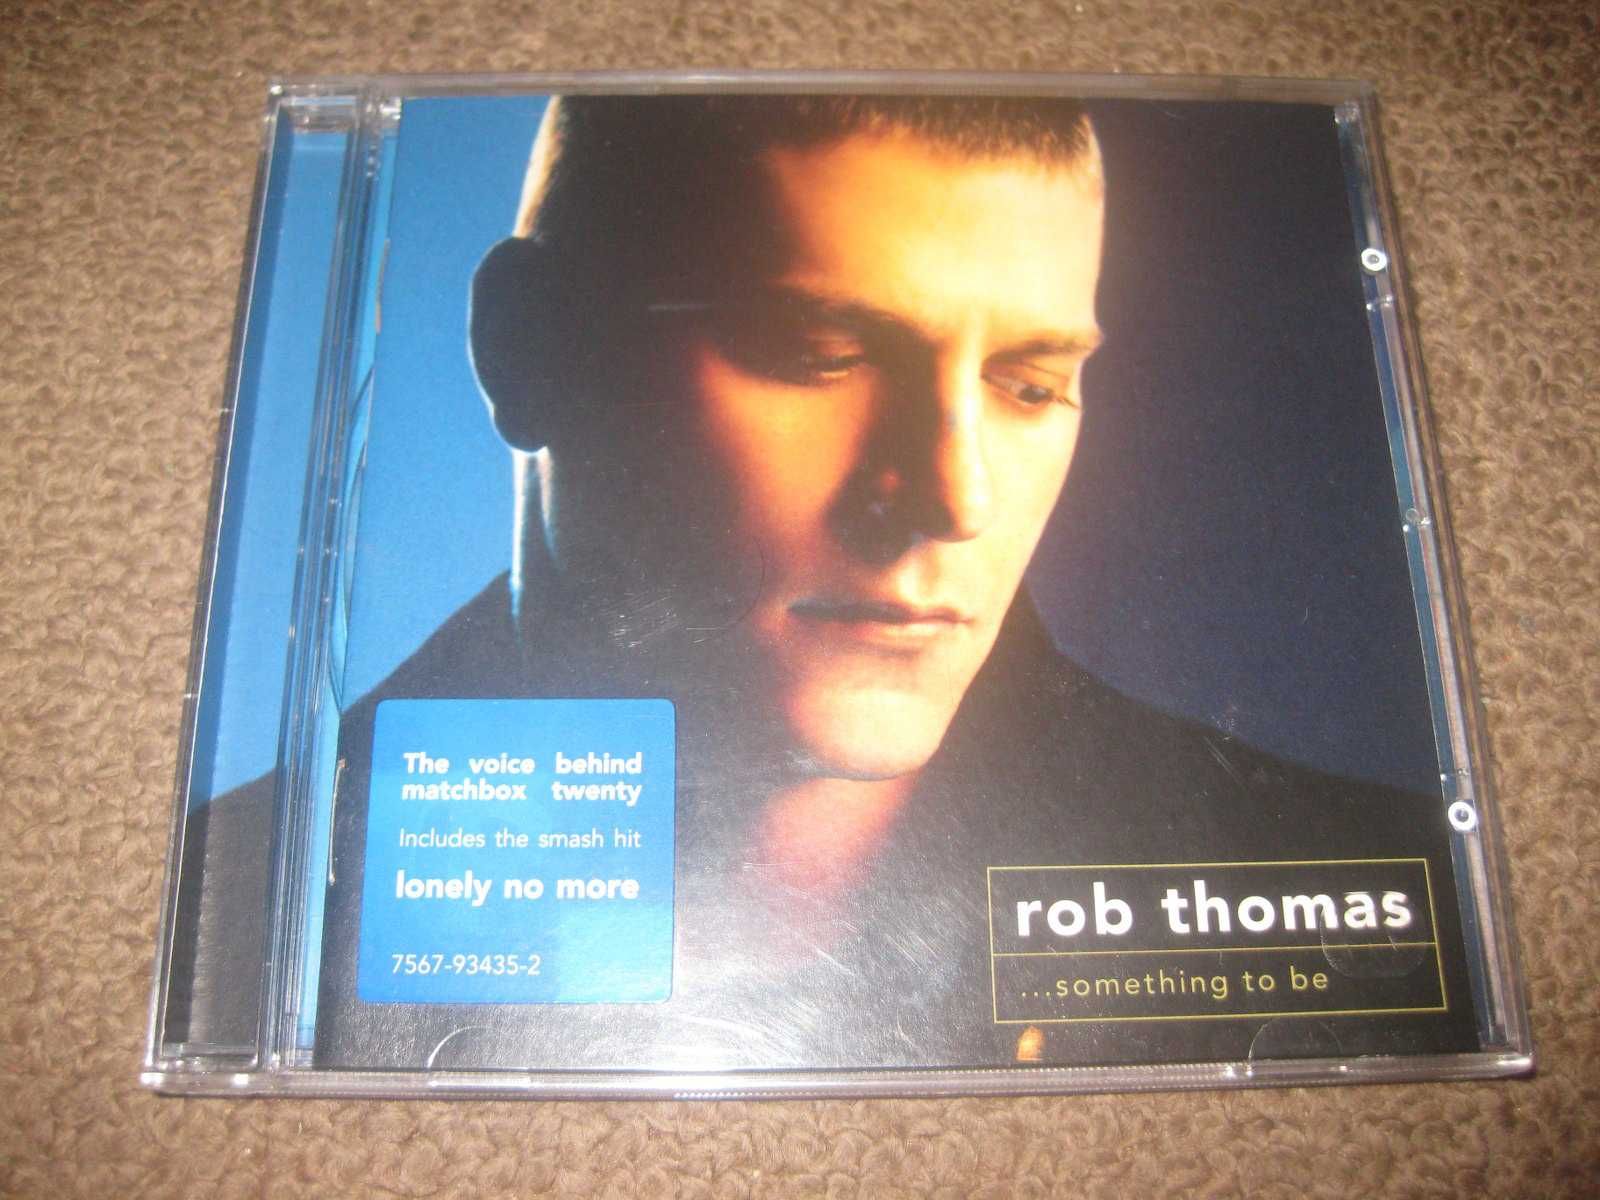 CD do Rob Thomas "...Something to Be" Portes Grátis!